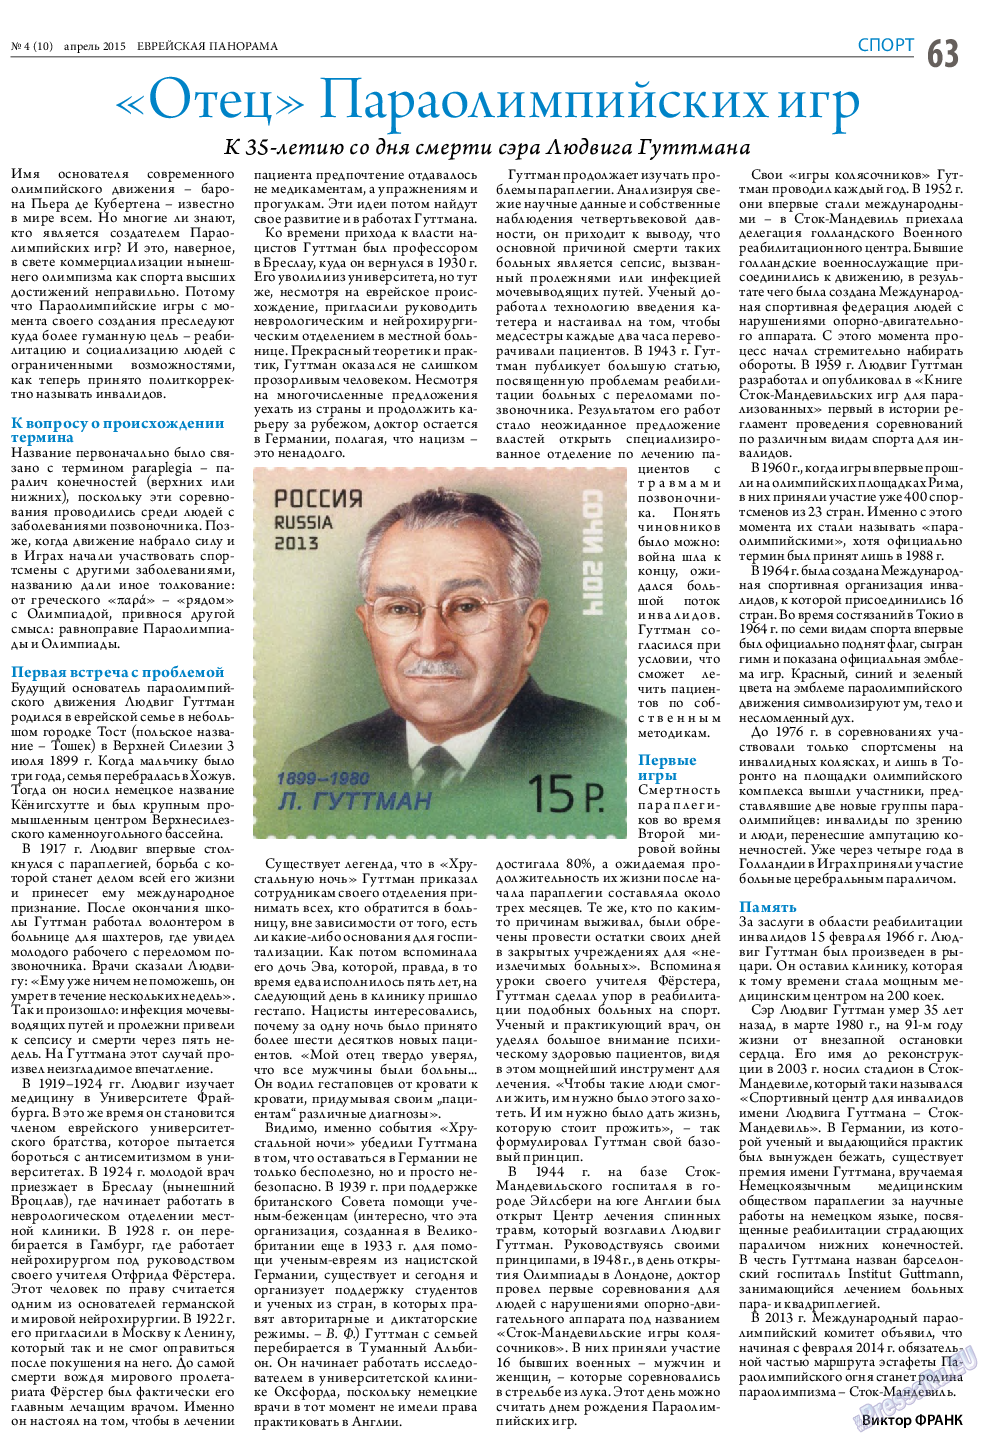 Еврейская панорама, газета. 2015 №4 стр.63